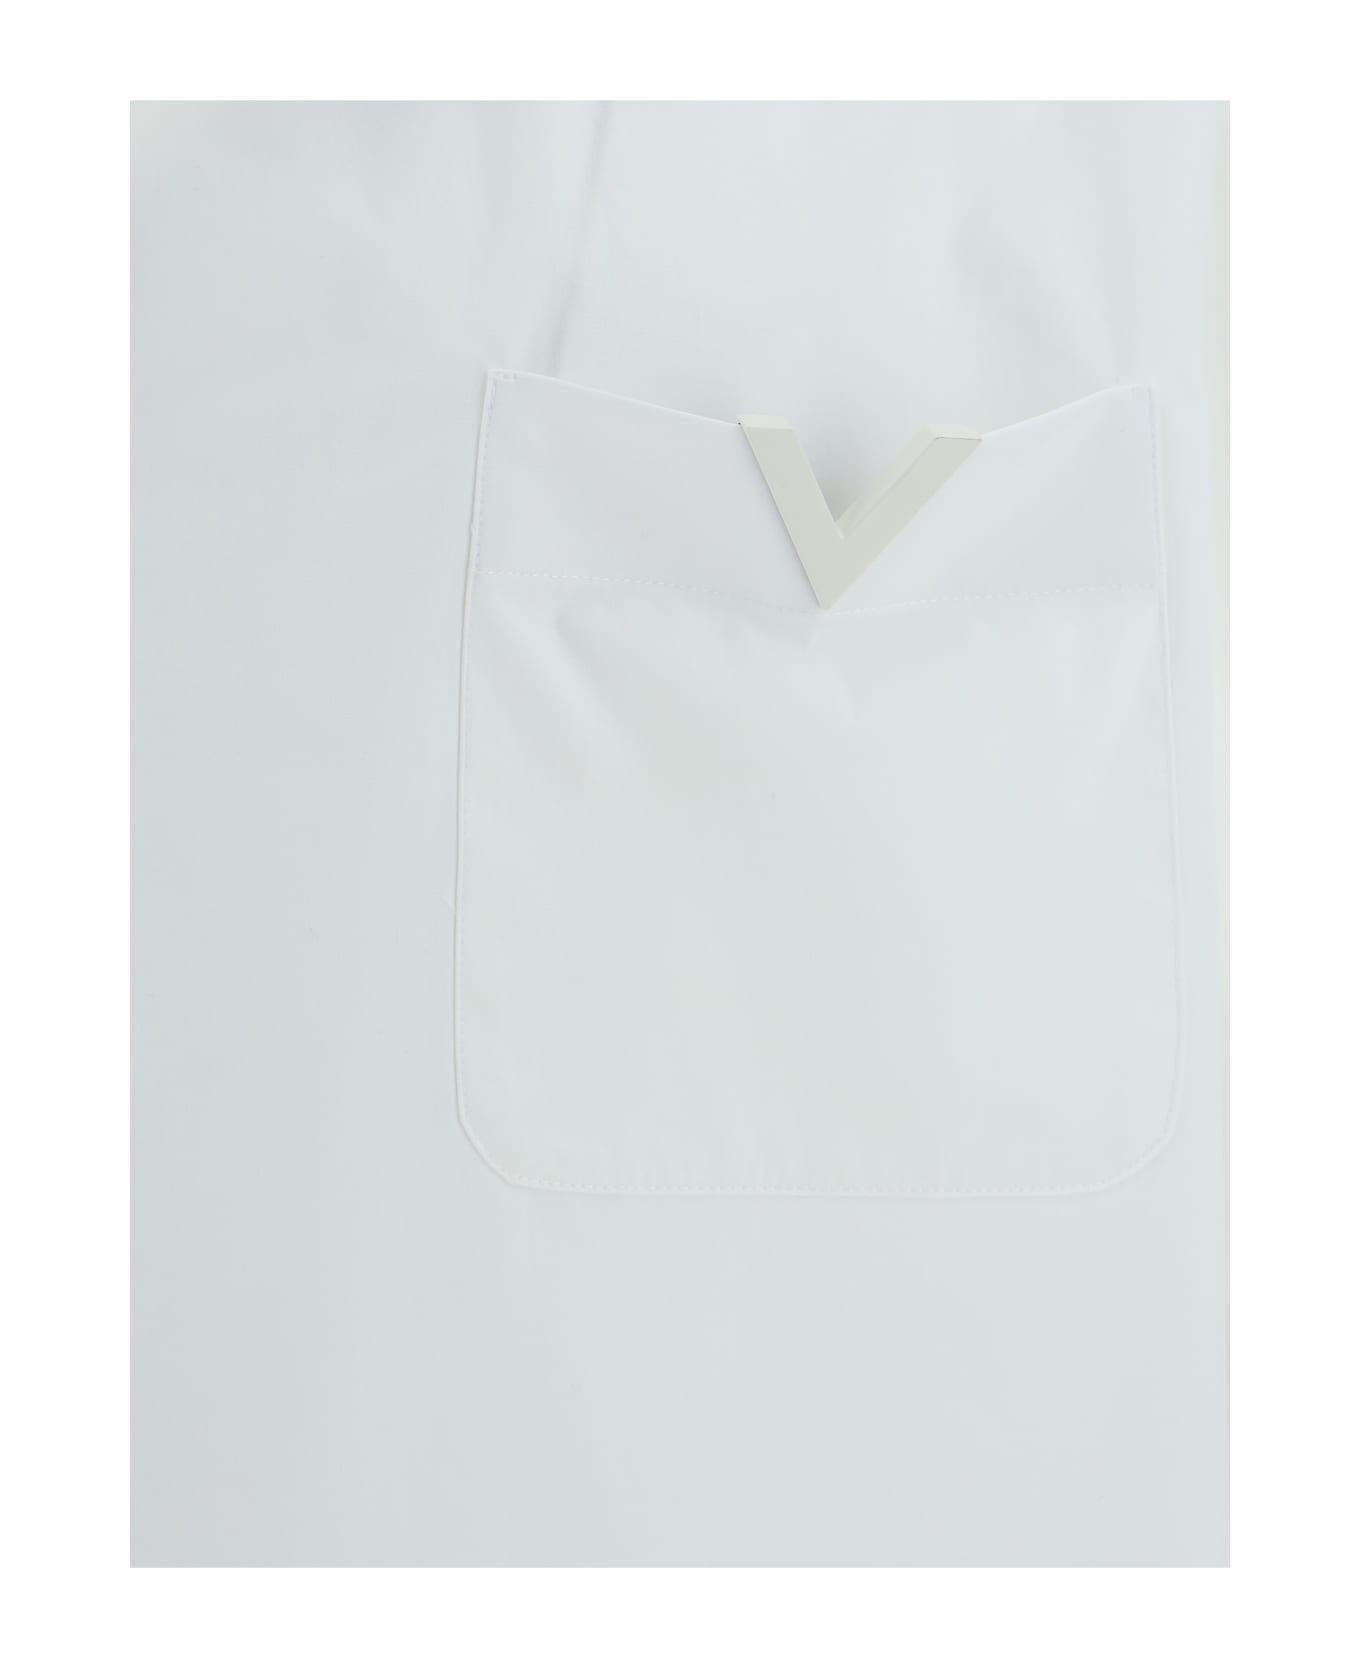 Valentino Shirt - White